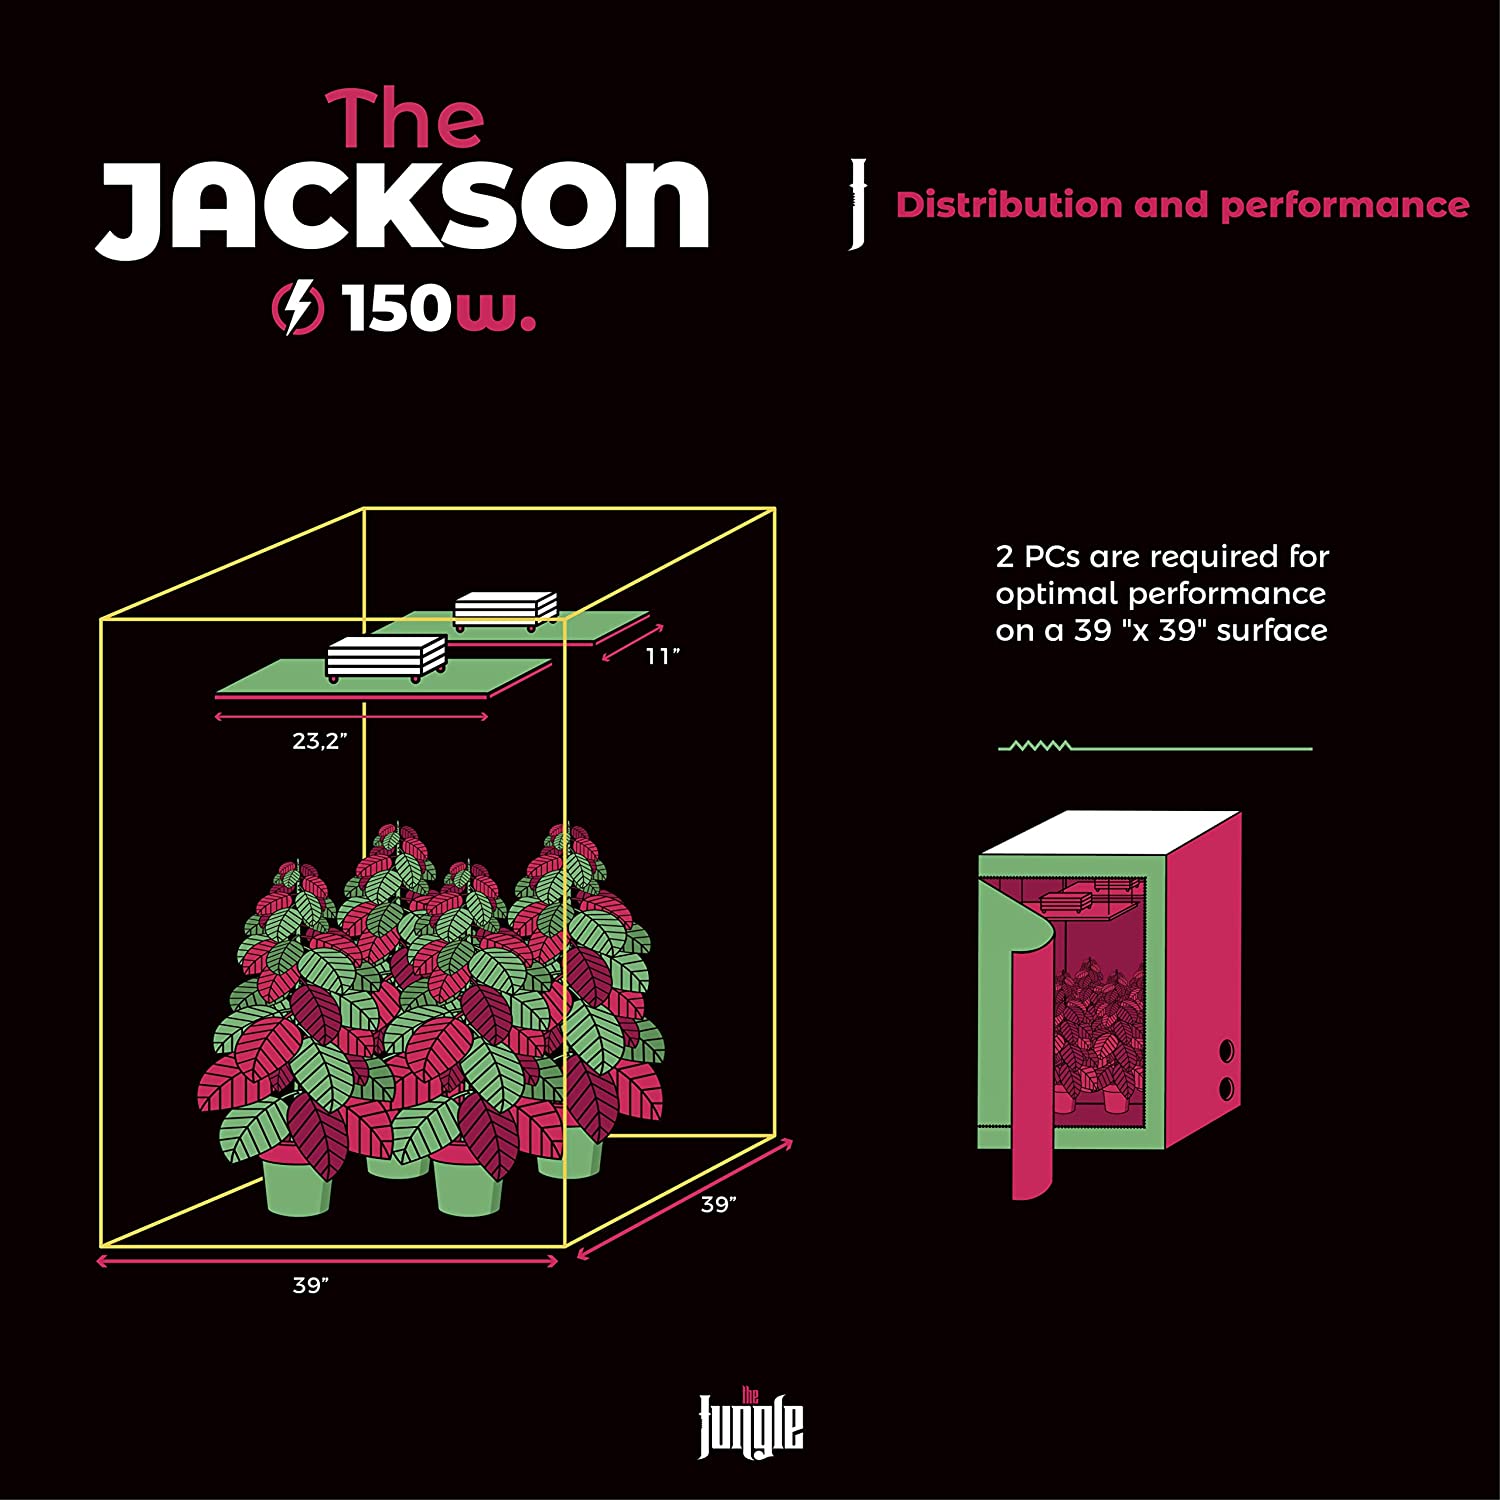 THE JUNGLE - THE JACKSON 150W